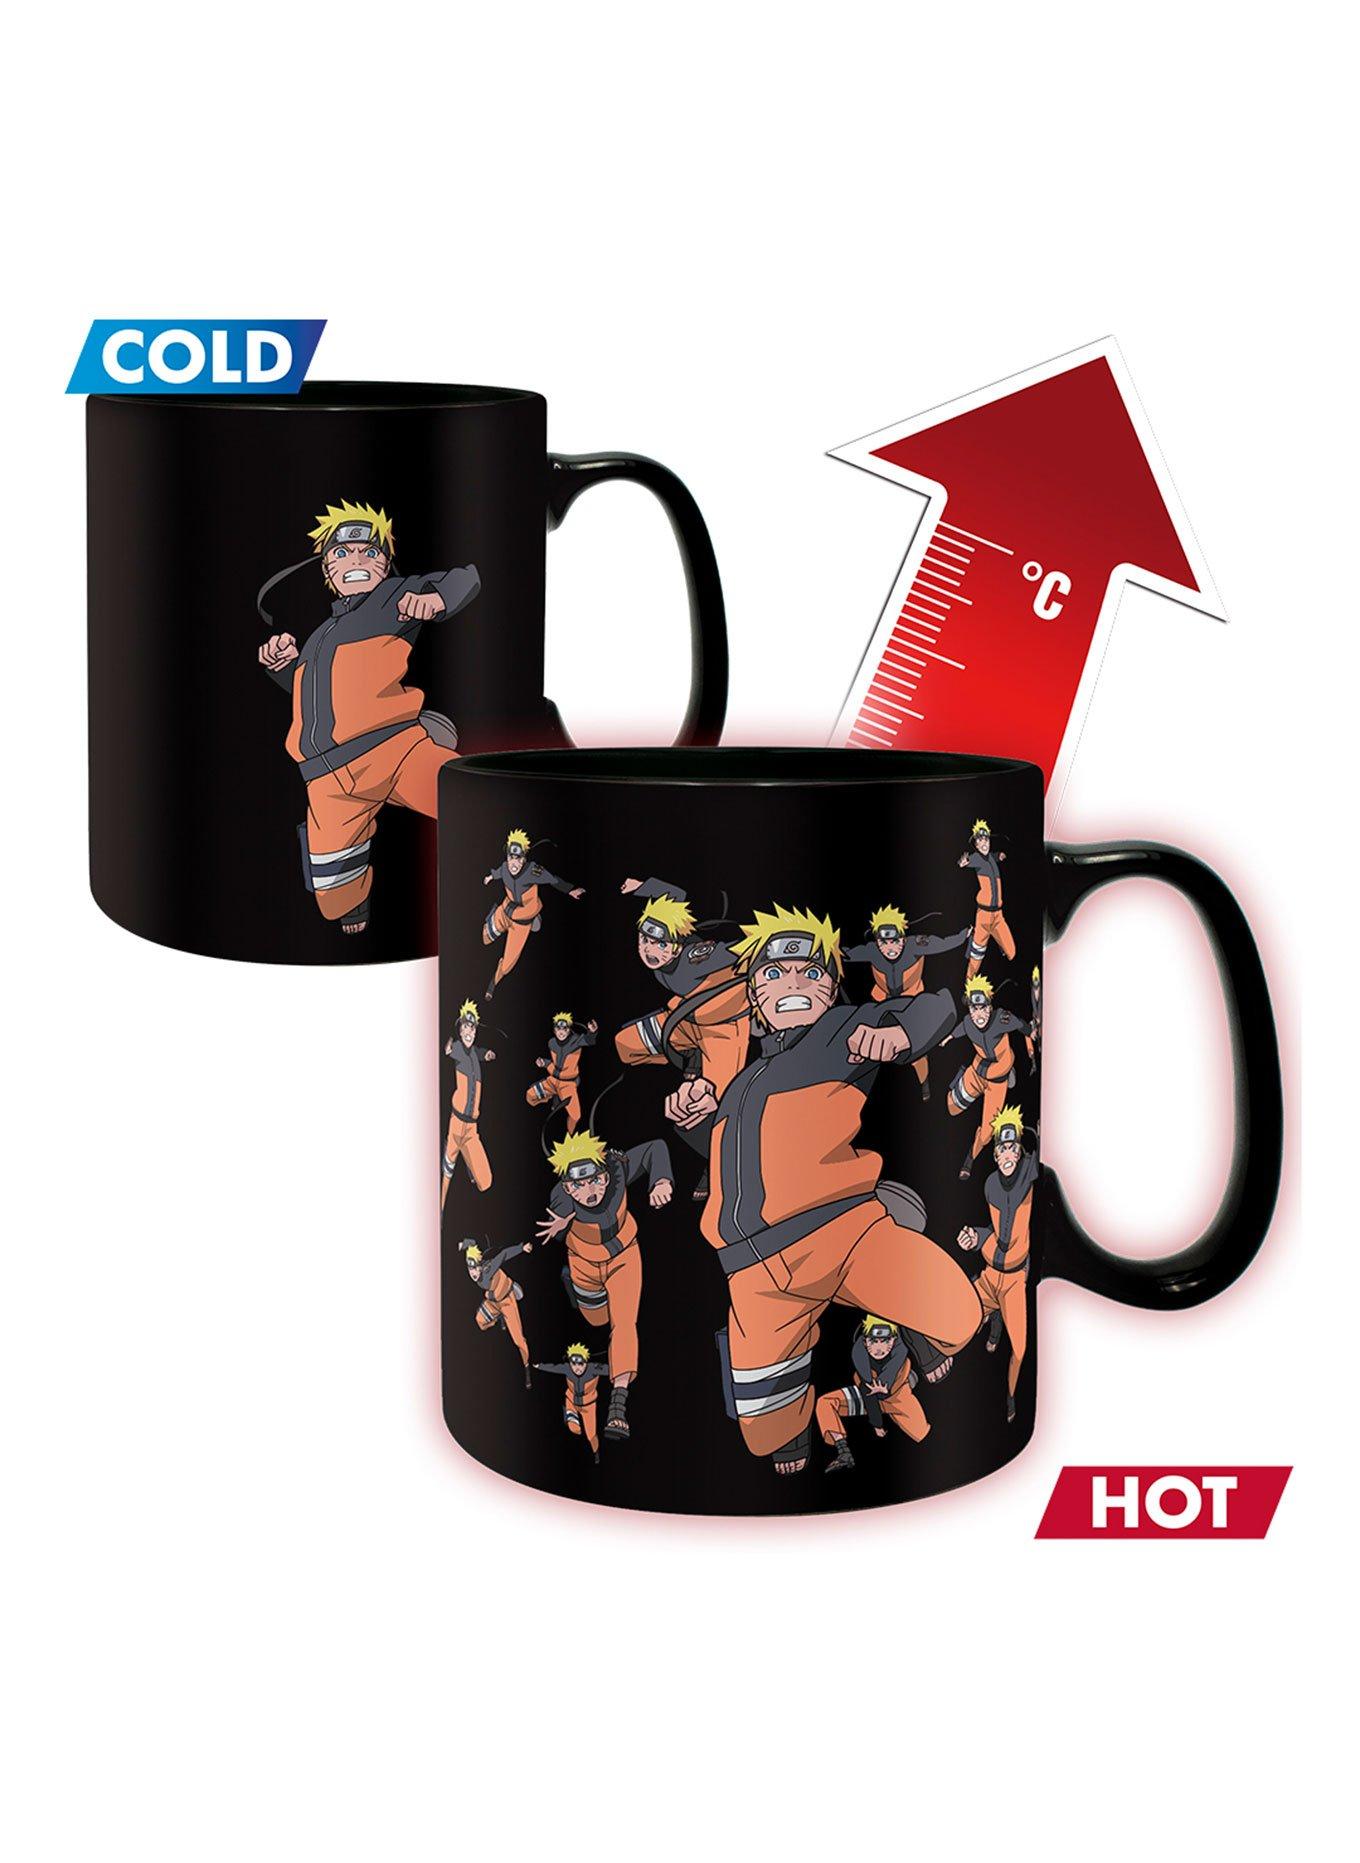 https://media.gamestop.com/i/gamestop/20005577_ALT02/ABYstyle-Naruto-Shippuden-Mug-and-Coaster-Gift-Set?$pdp$